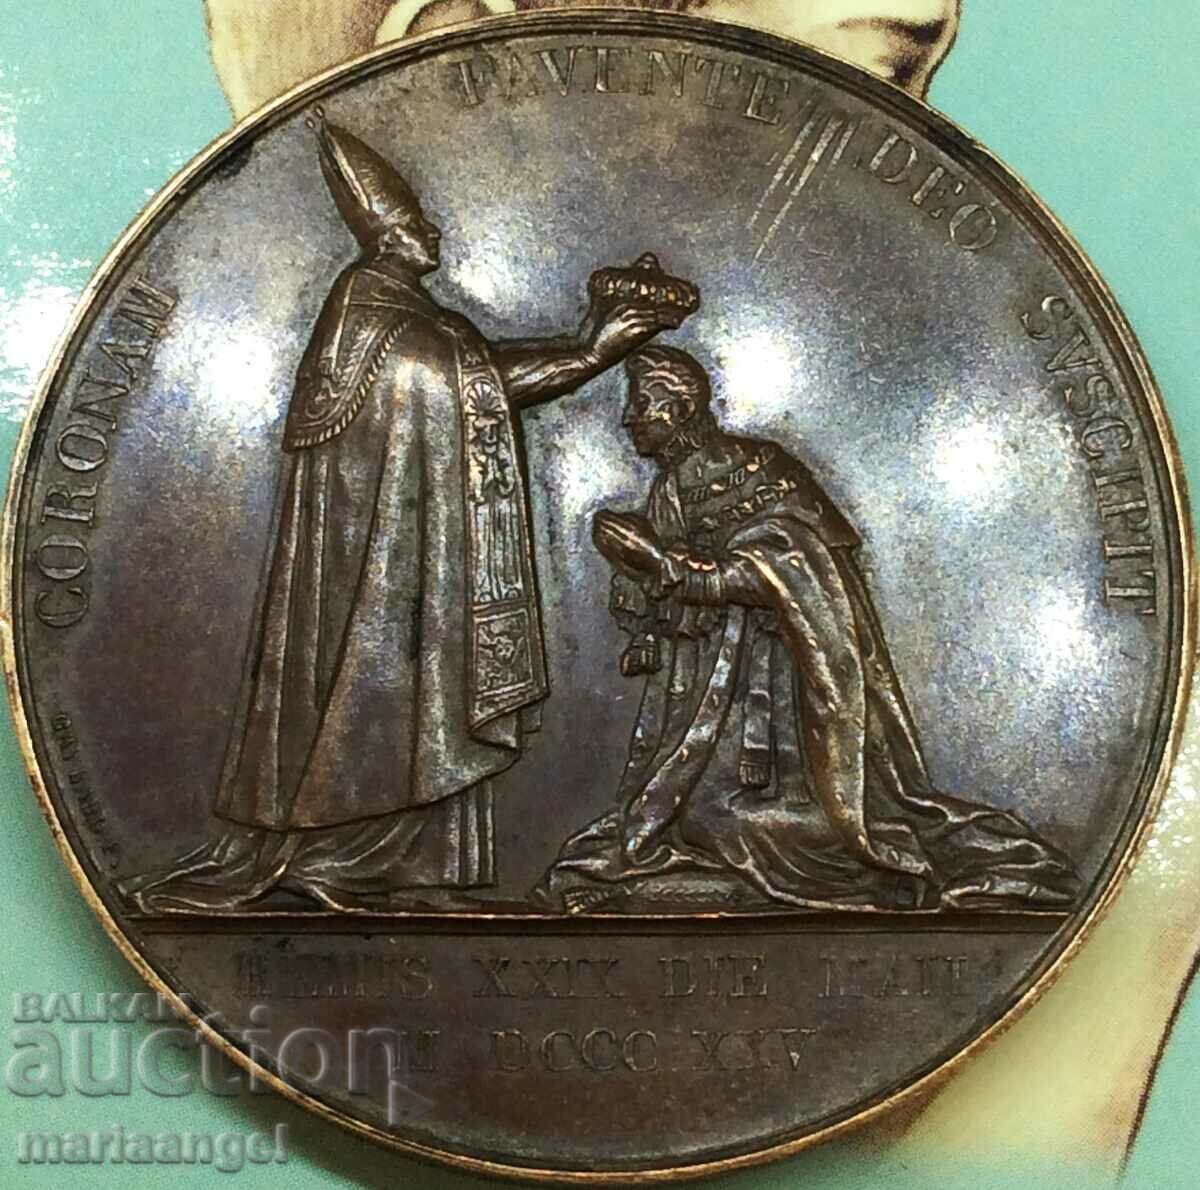 France 1825 Coronation of Charles X medal 31.6g bronze